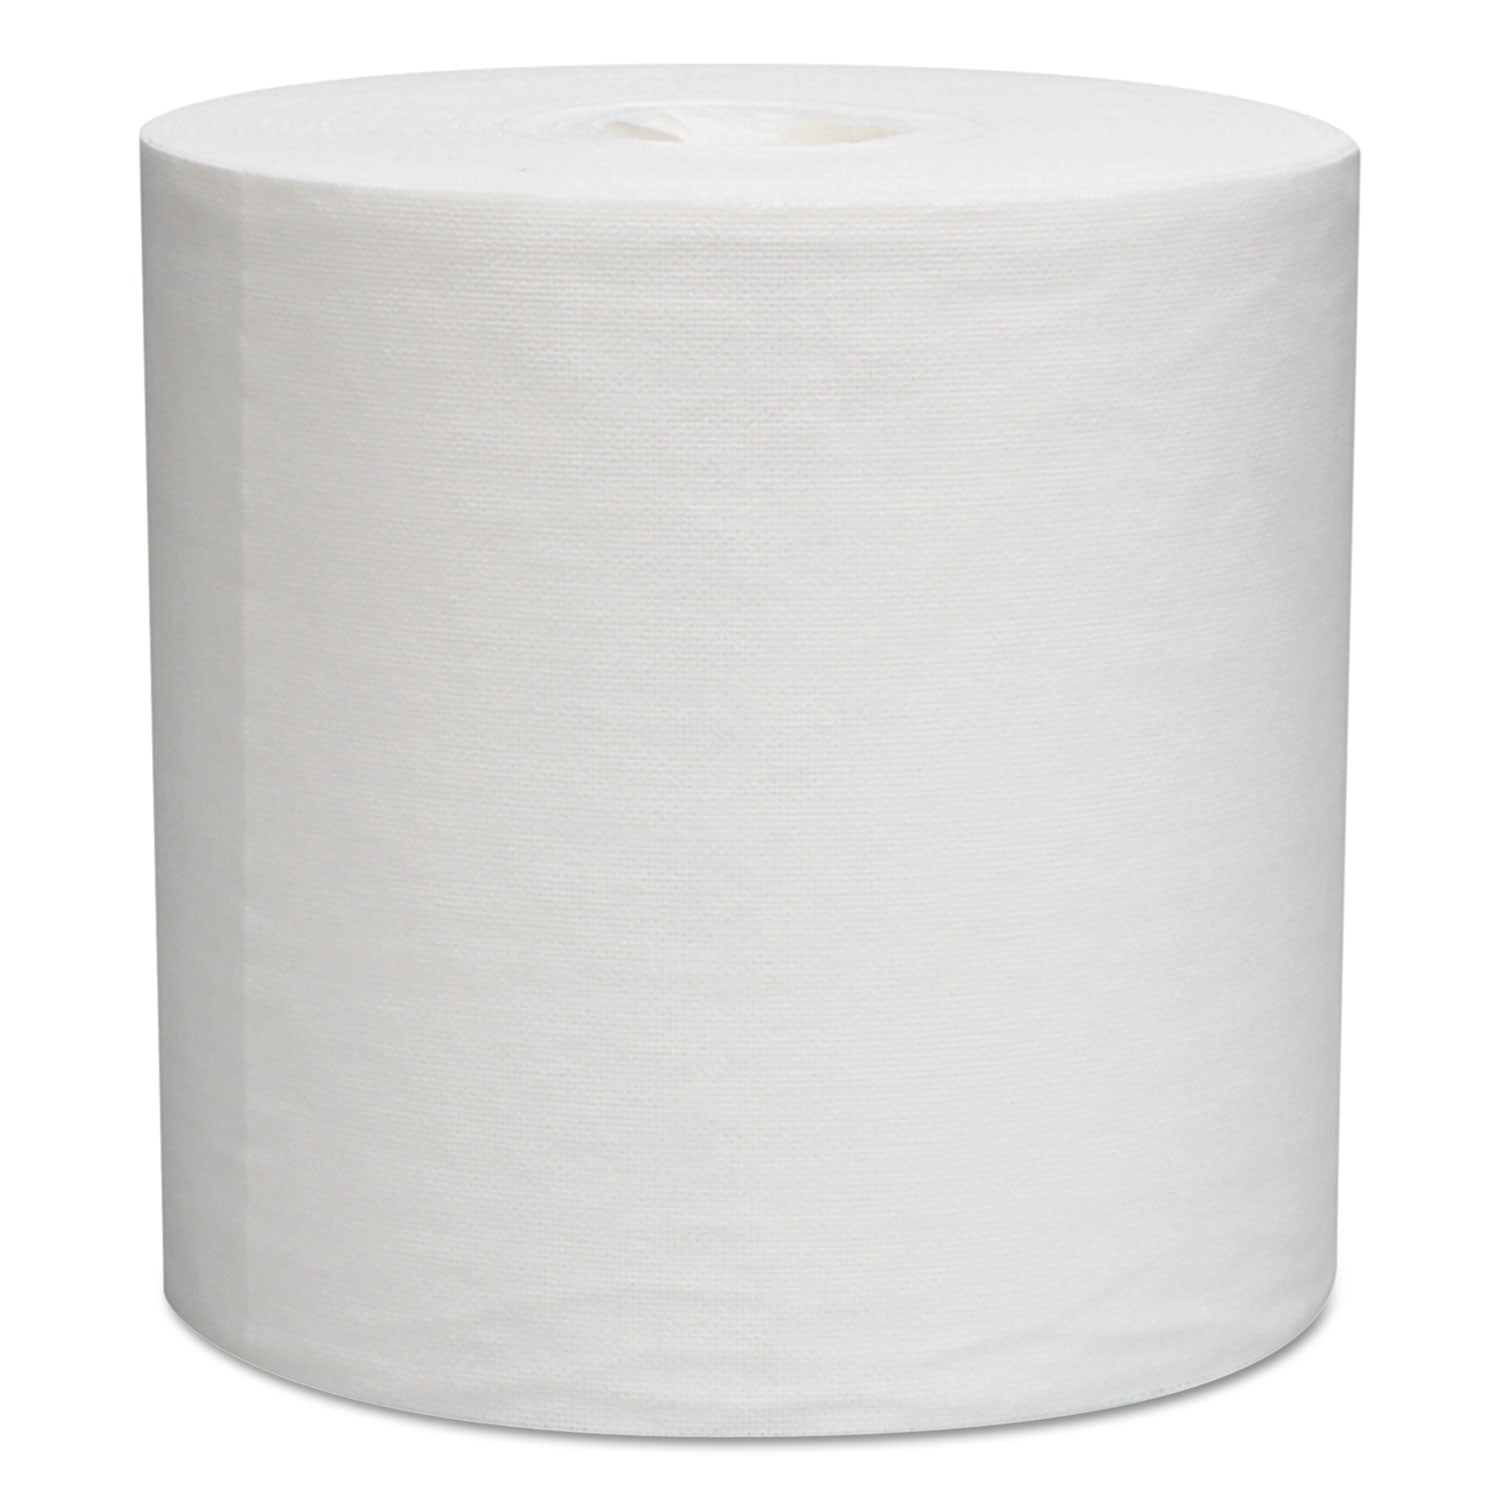 L30 Towels, Center-Pull Roll, 9.8 x 15.2, White, 300/Roll, 2 Rolls/Carton - 